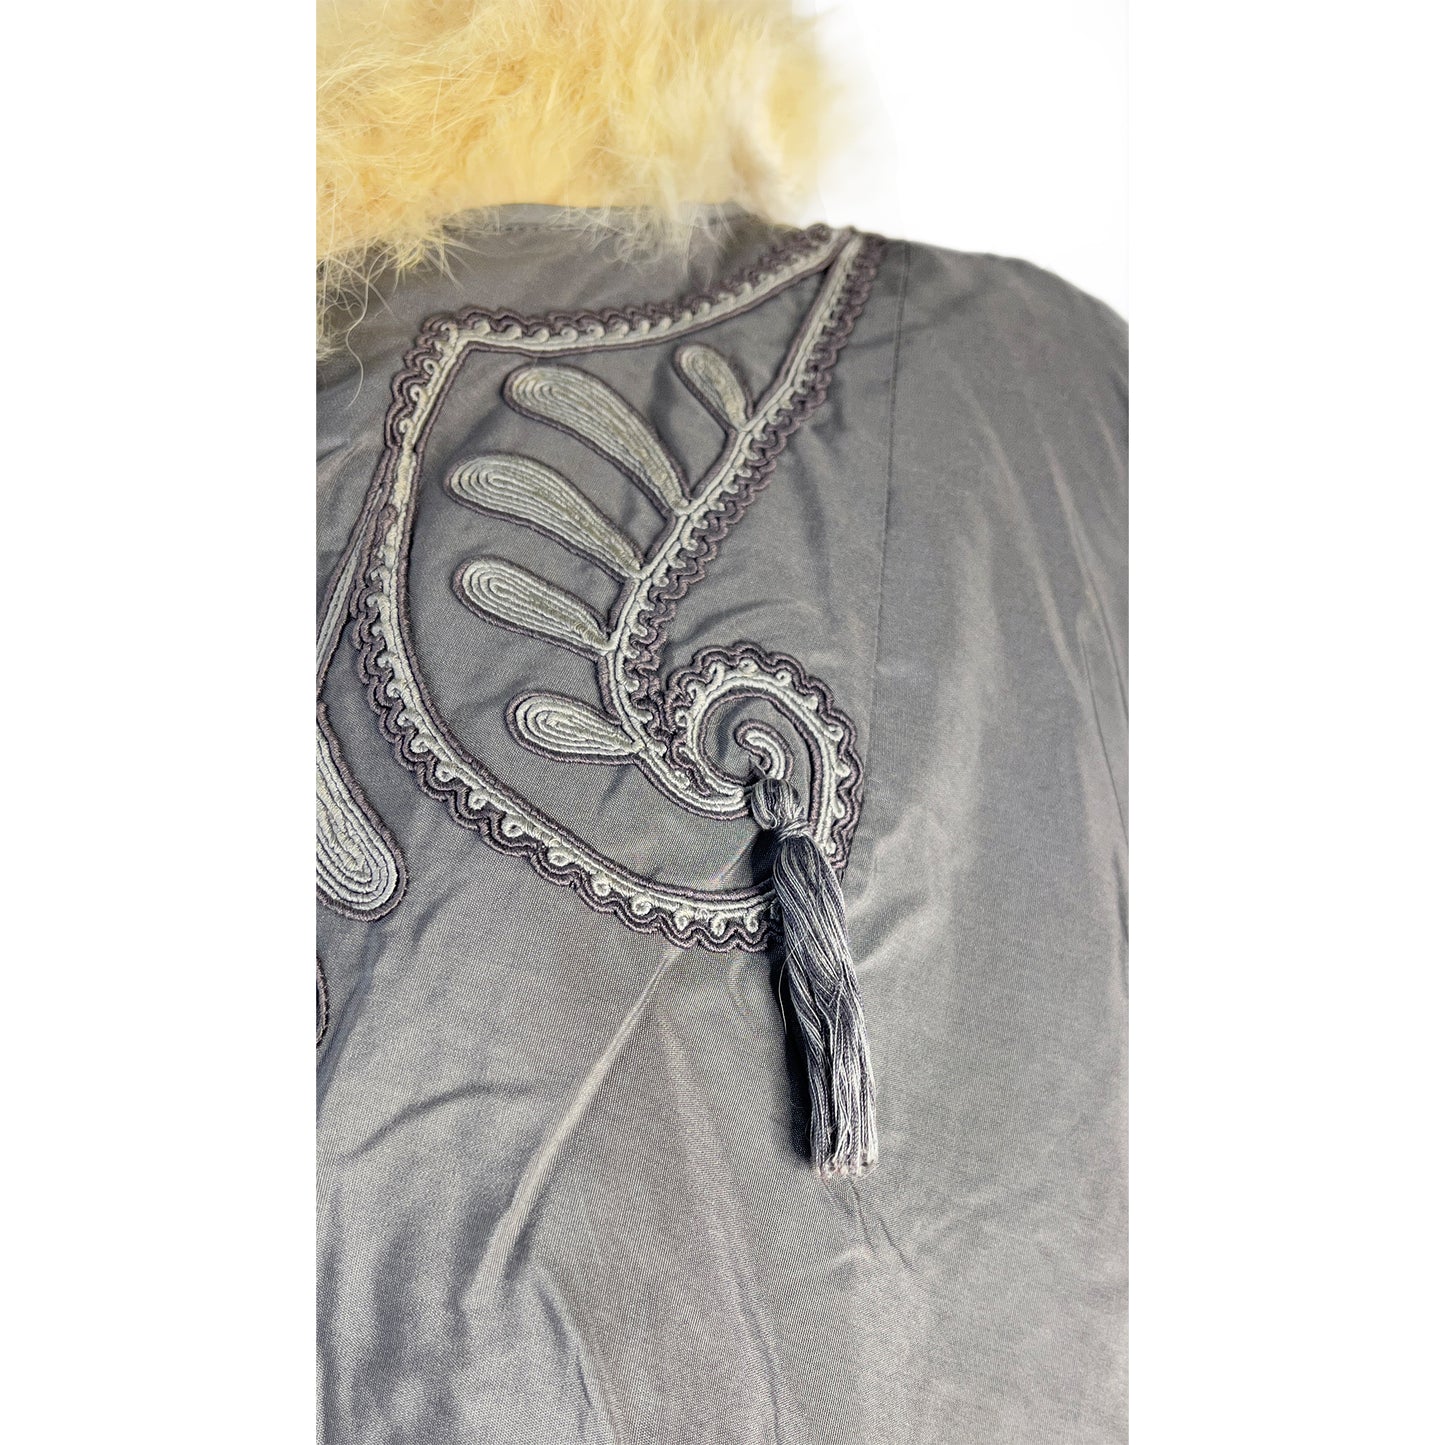 Cape Fur Lining Embroidery & Tassel Details Gray, Cream Size L/ XL SKU 000378-1